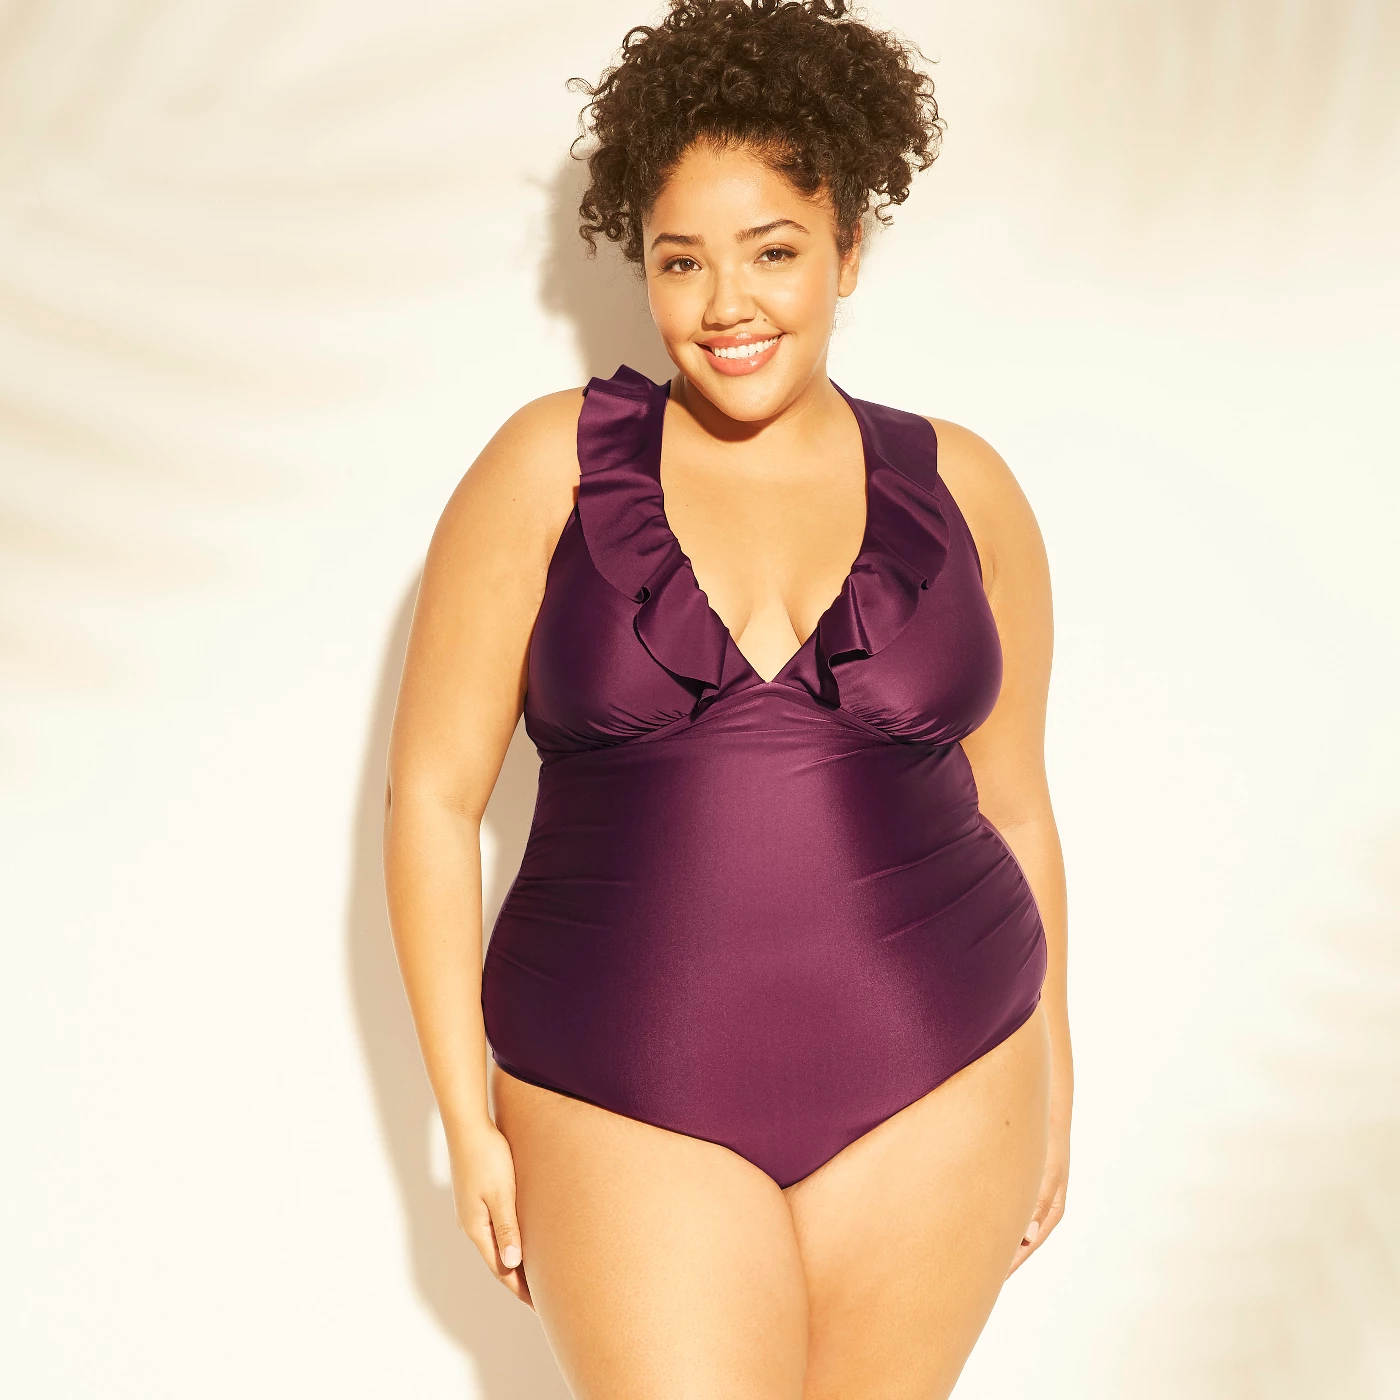 Women's Plus Size Ruffle One Piece Swimsuit - Kona Sol™ - image 1 of 2